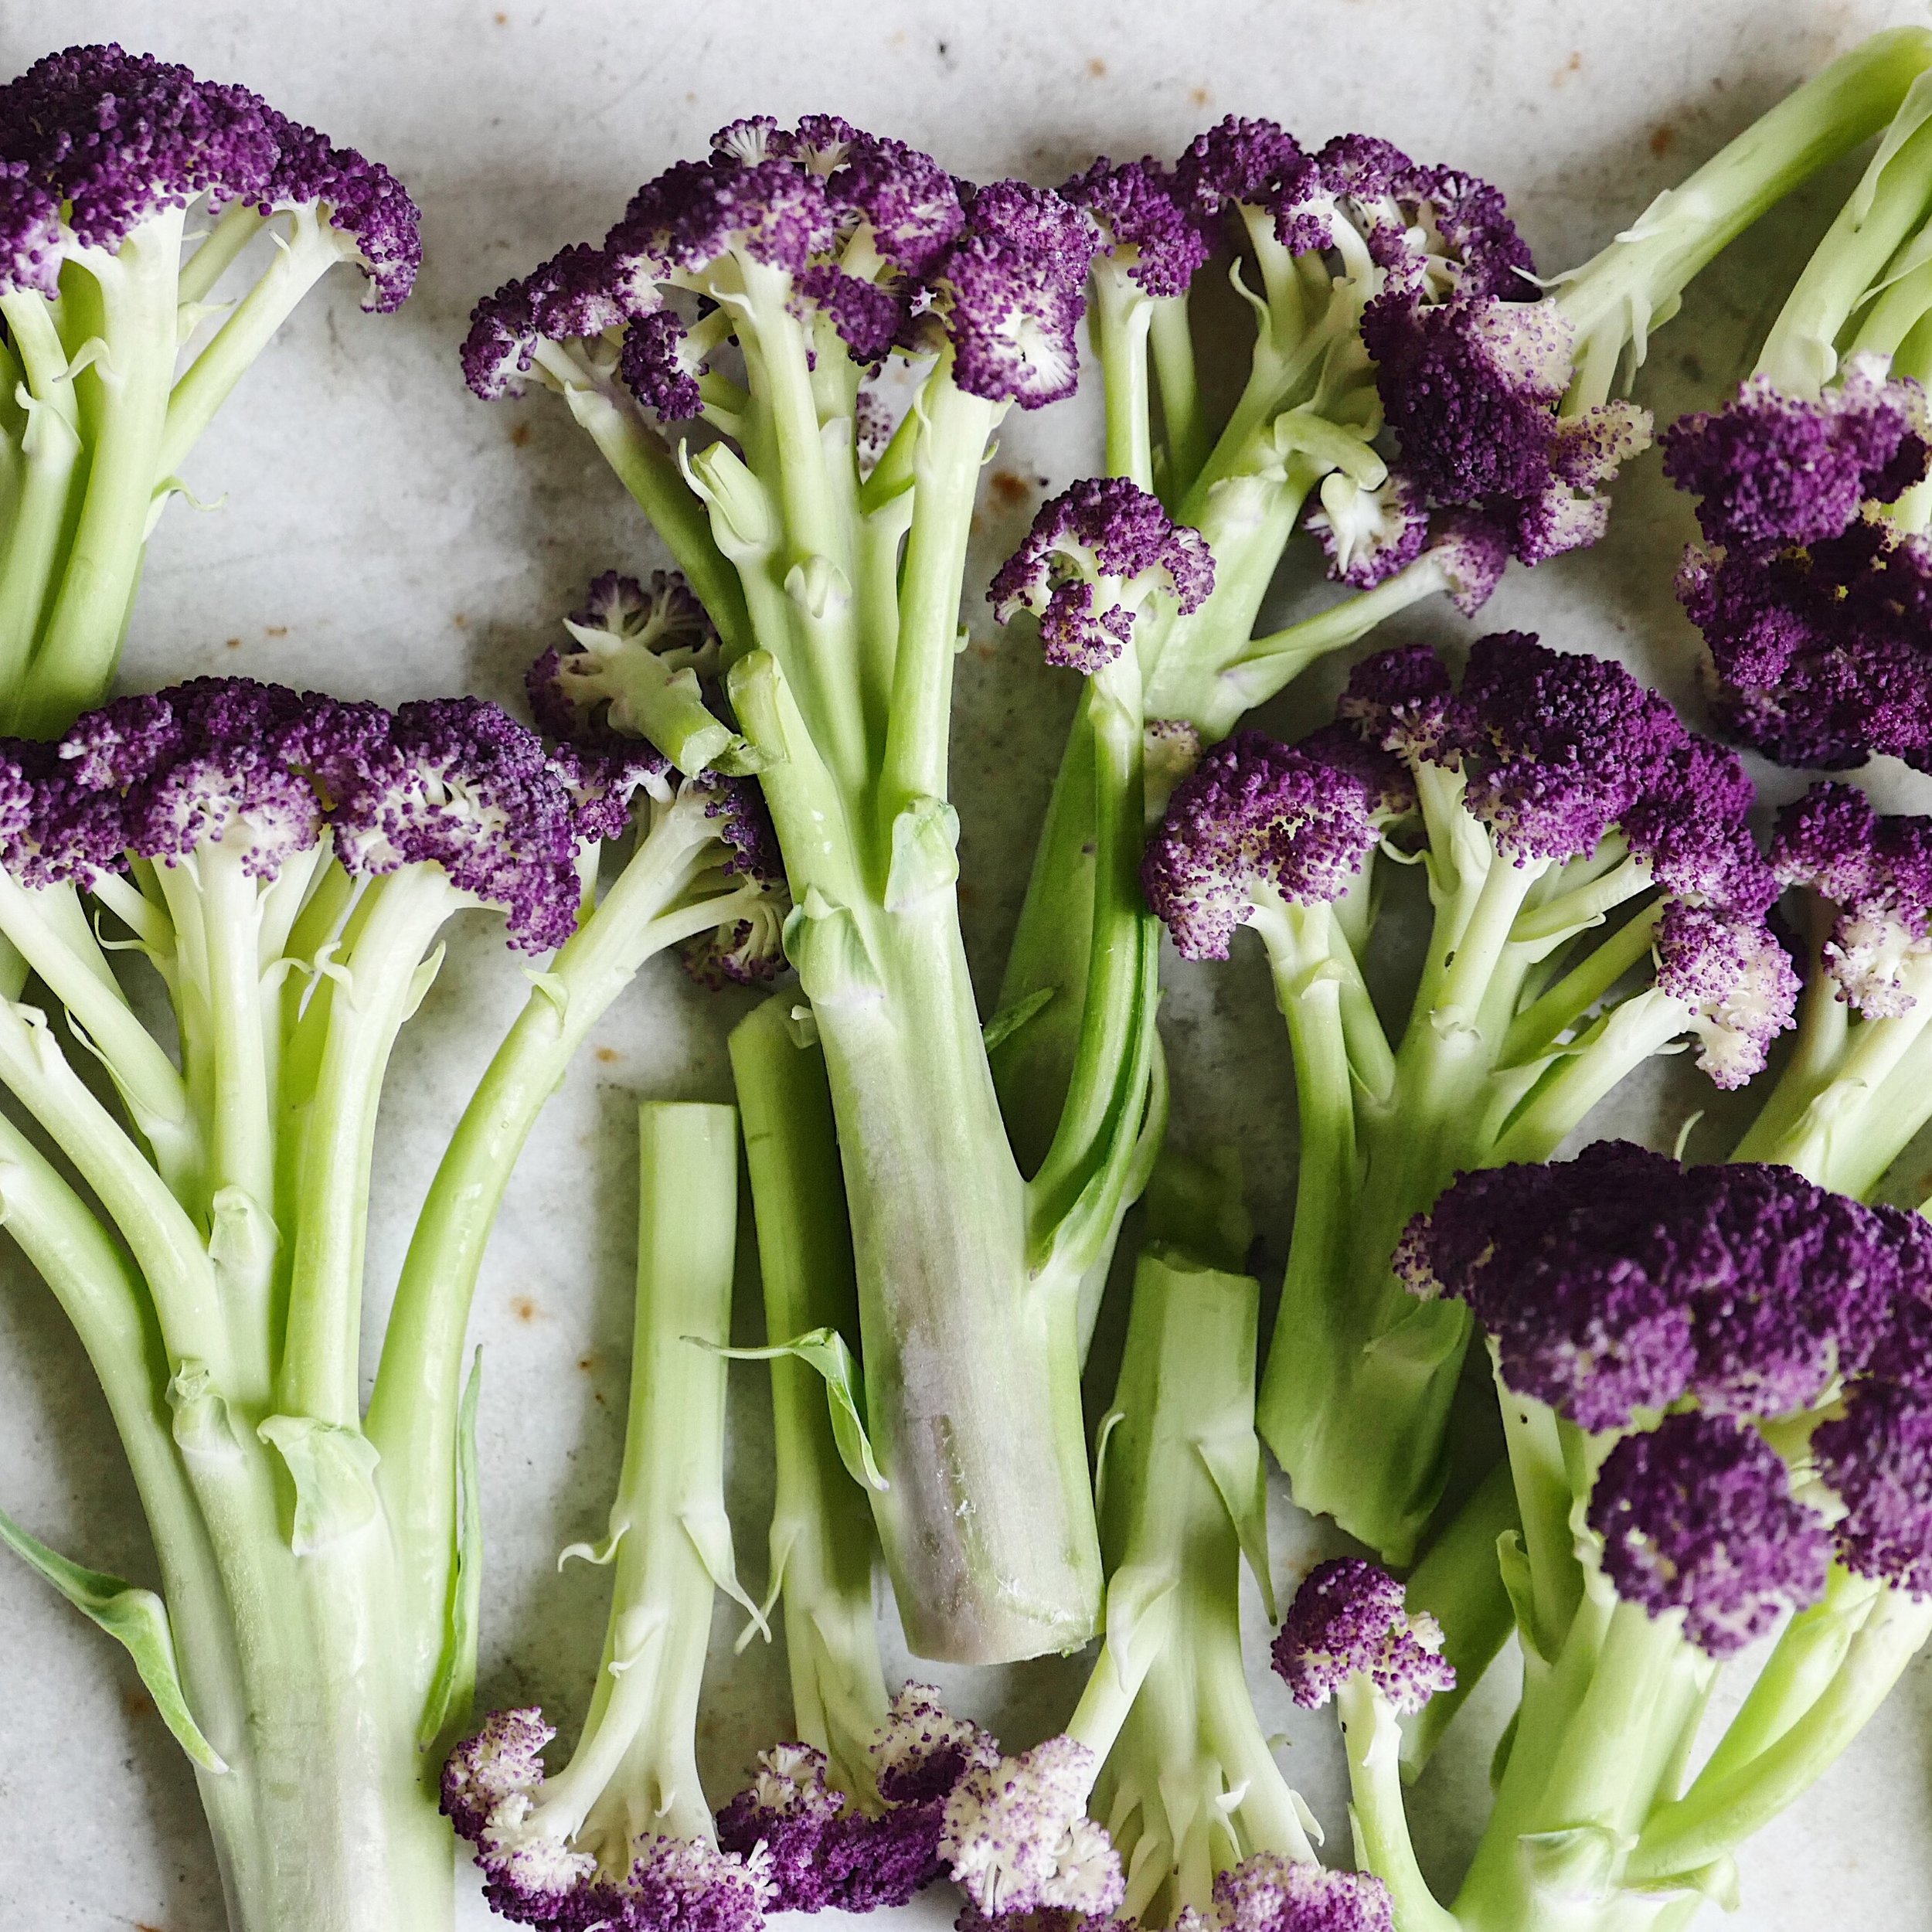 Purple Cauliflowers